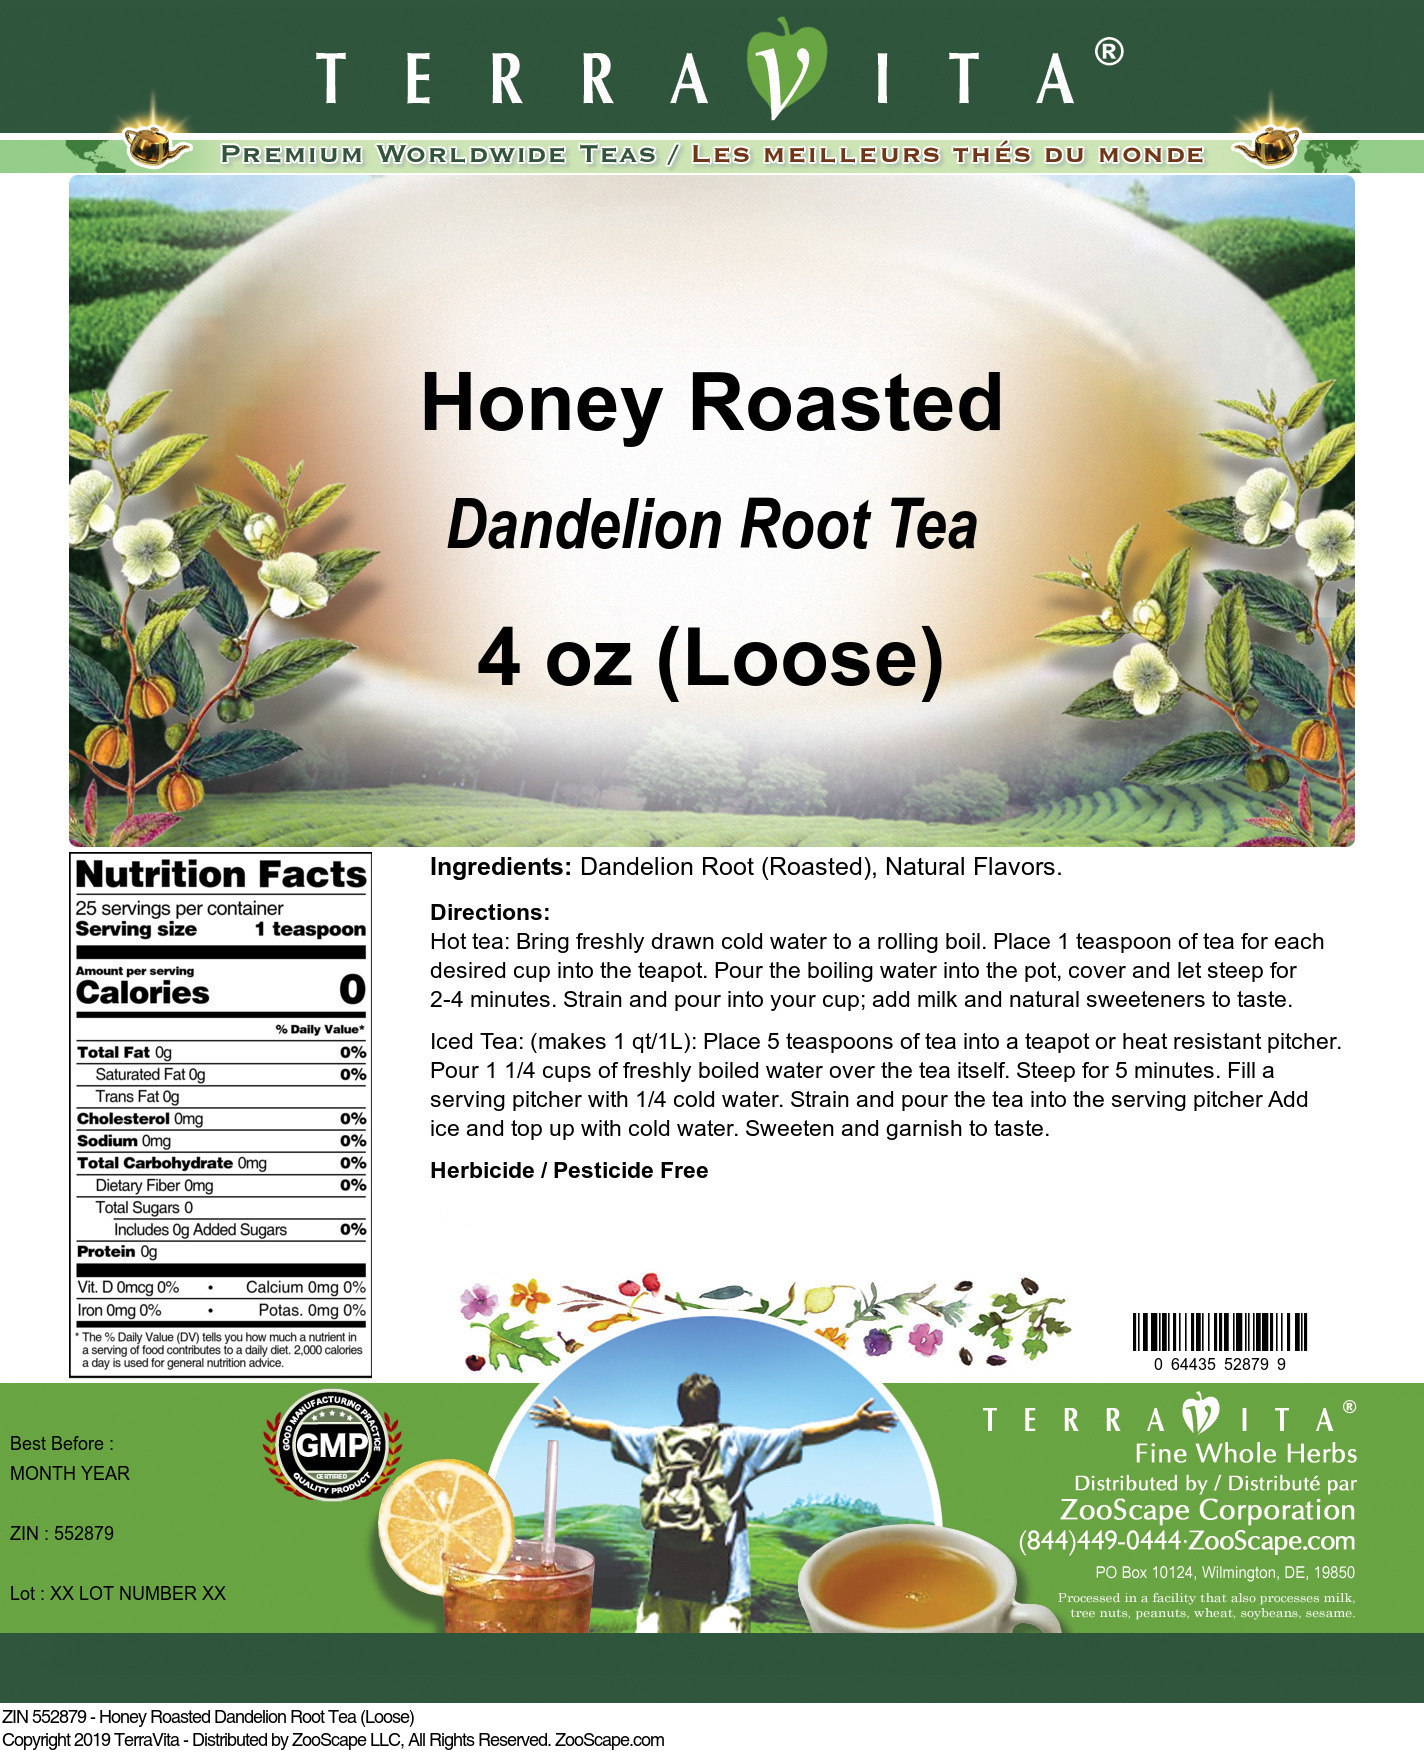 Honey Roasted Dandelion Root Tea (Loose) - Label